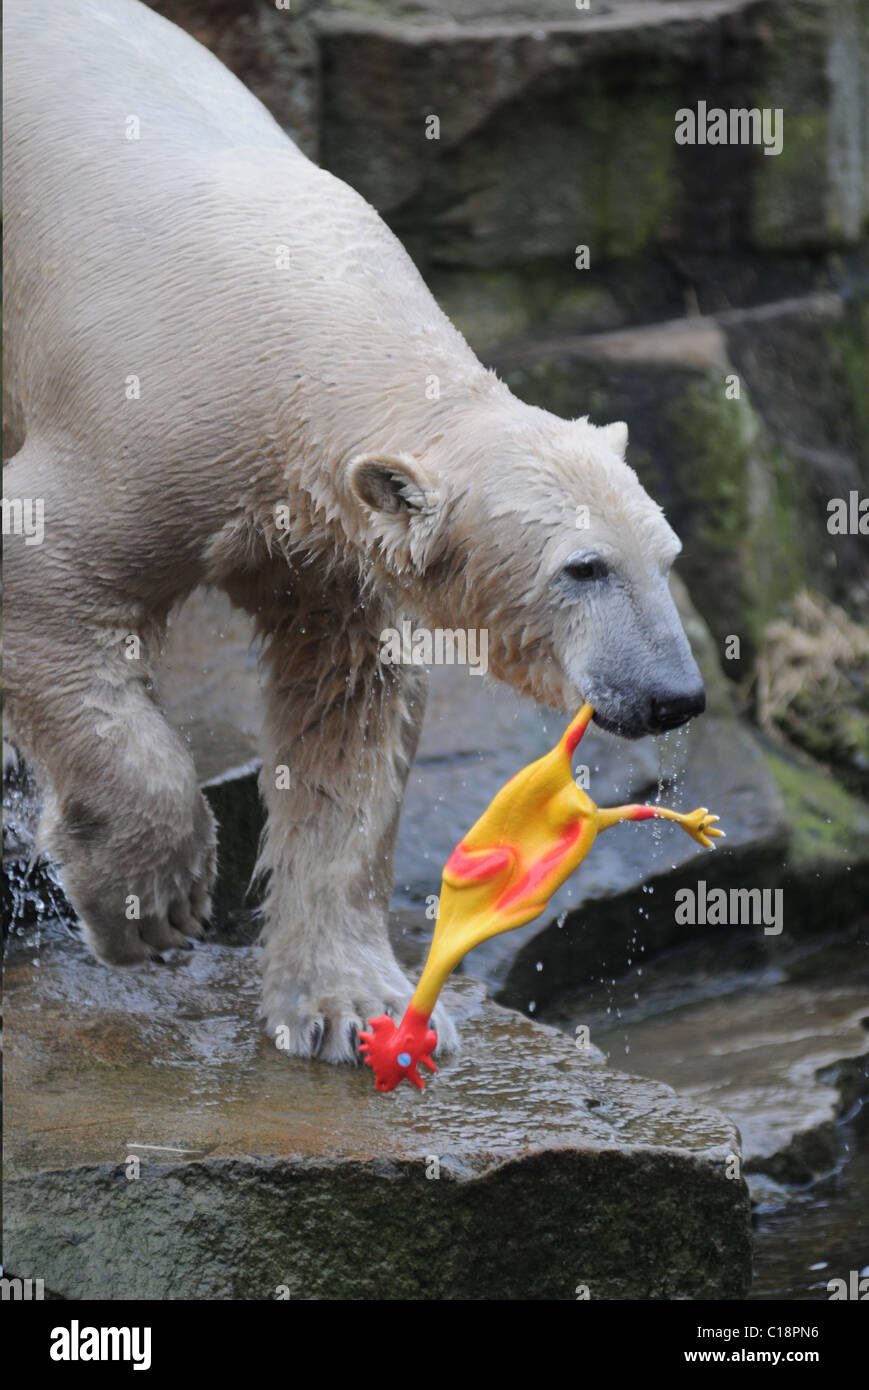 famous-polar-bear-knut-got-a-new-toy-a-r